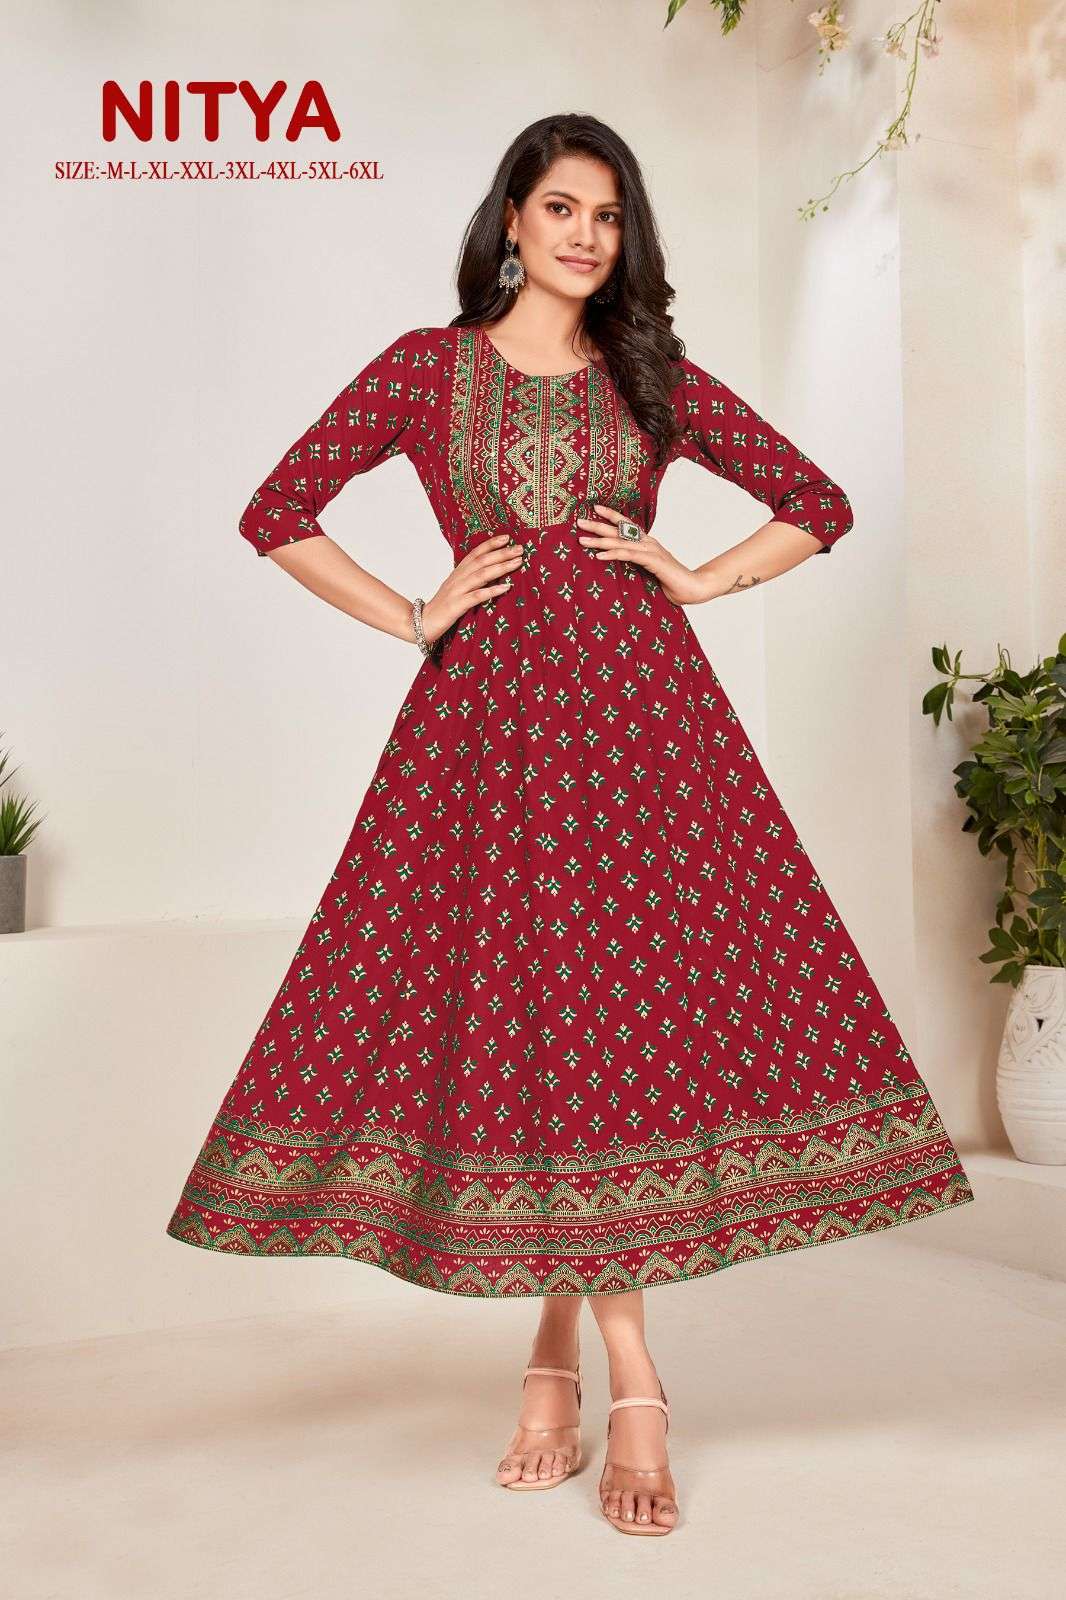 PLUS size Kurtis(XS-5XL) : starting ₹535/- free COD WhatsApp +919730930485  | Long kurti designs, Designer kurti patterns, Long dress design